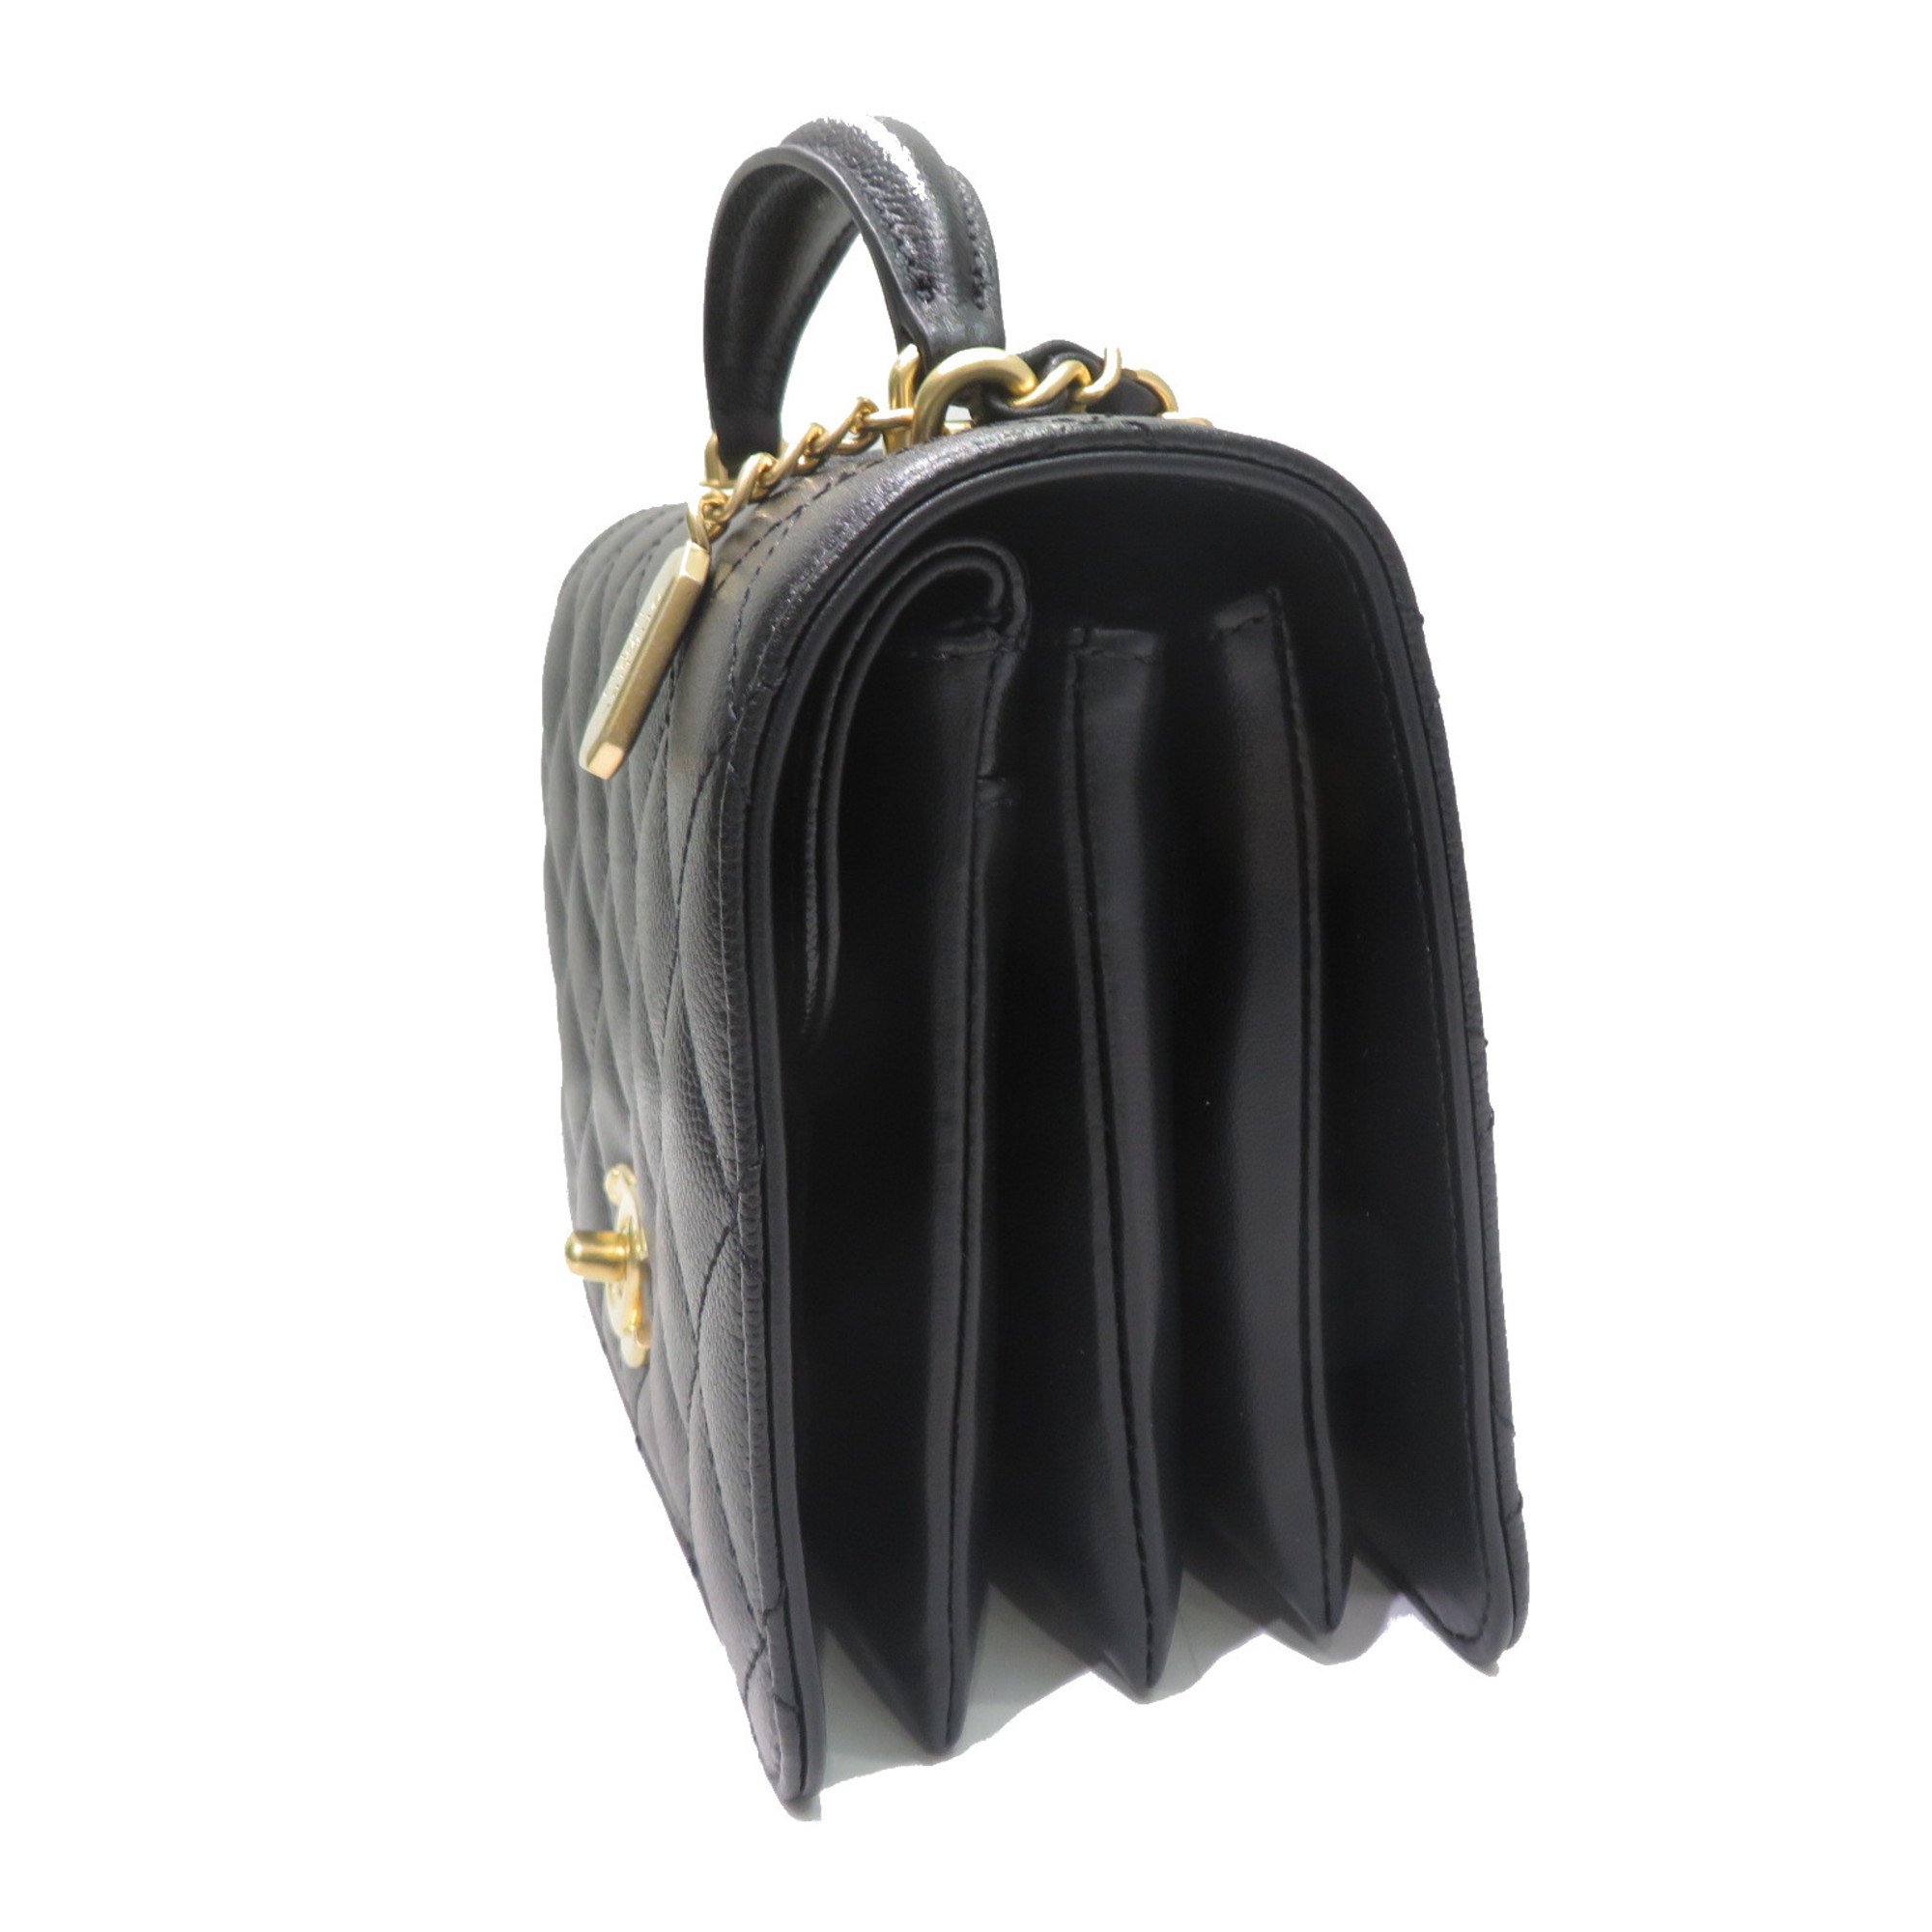 CHANEL Small Flap Bag AS4286B Handbag Shoulder Black/G Hardware Glendo Calfskin & Lambskin Women's